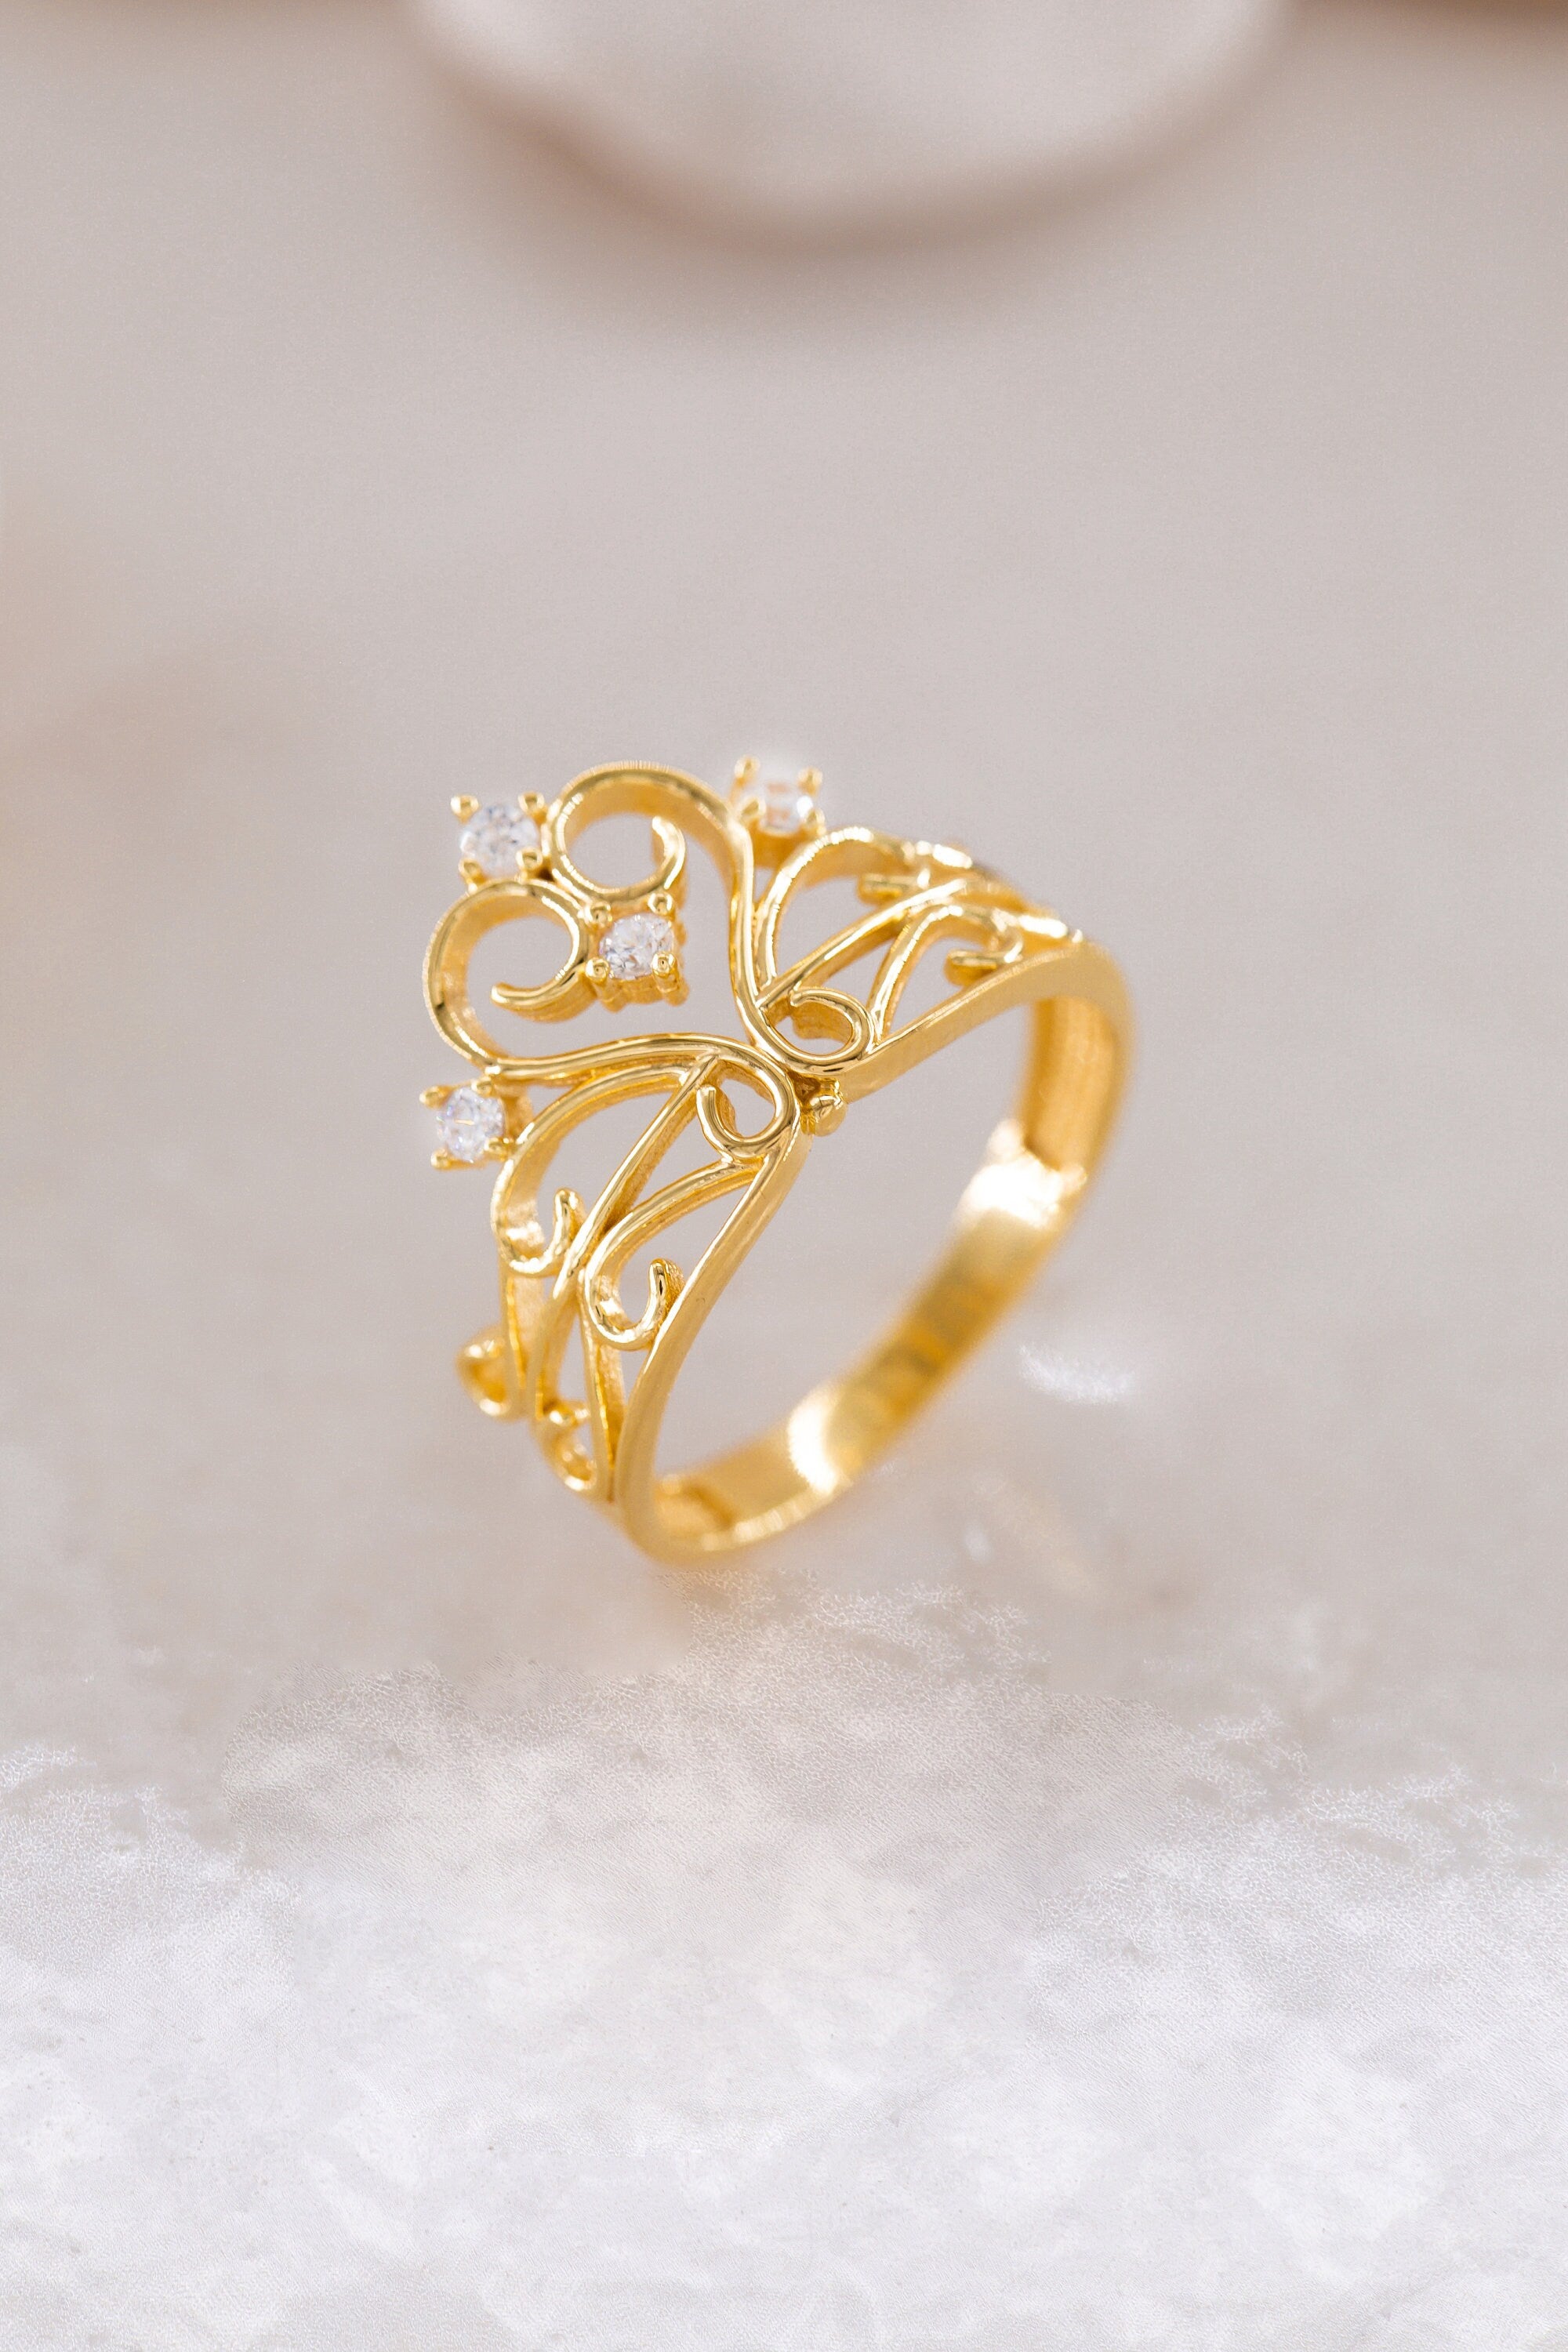 14K Gold Princess Crown Ring, 925 Silver Tiara Jewelry, Royal Engagement Band, Elegant Bridal Gift, Promise Ring, Fairytale Wedding Ring